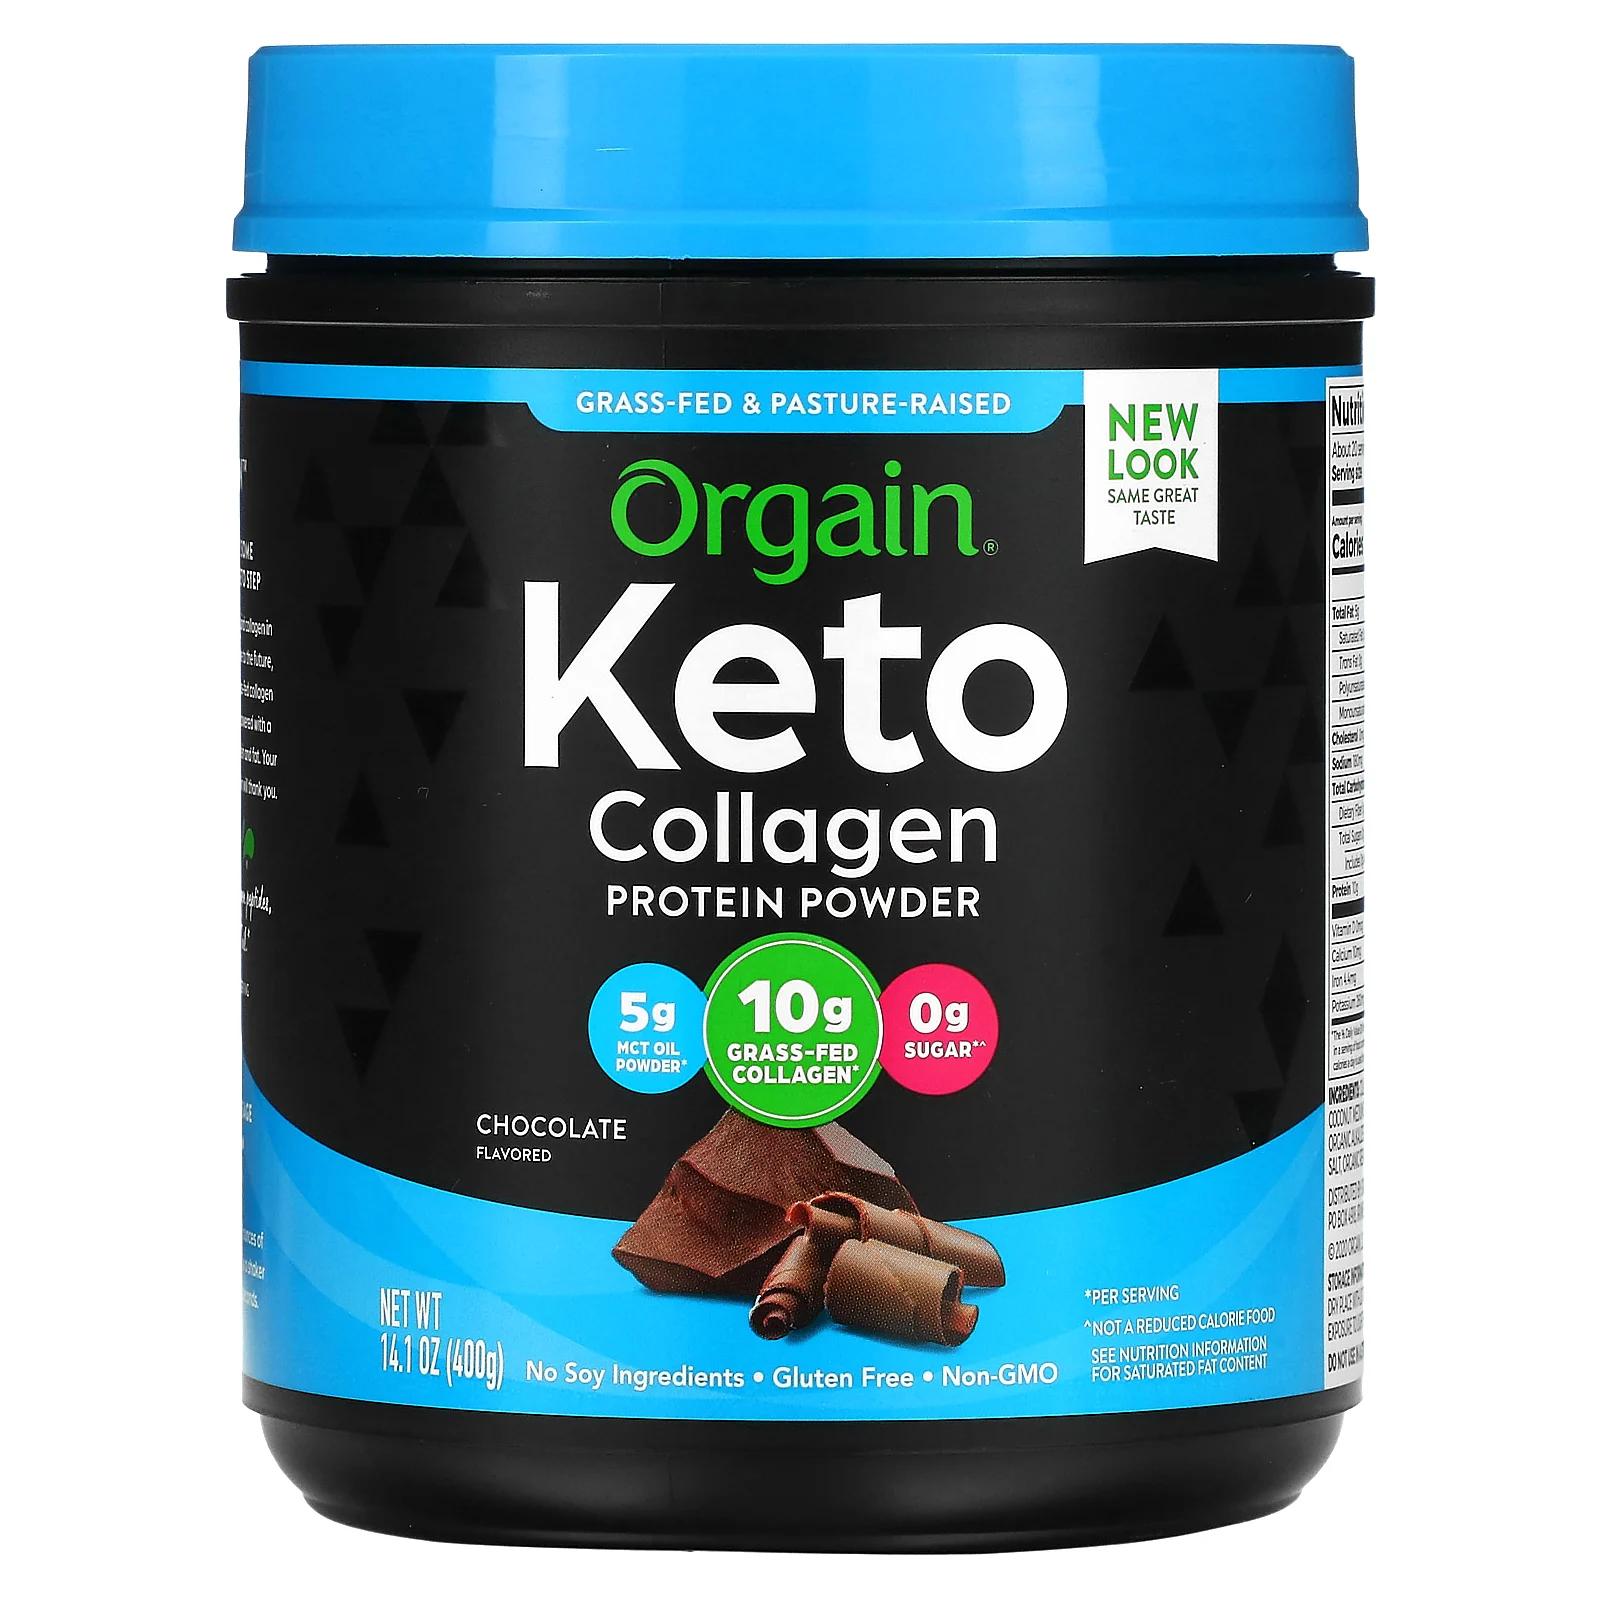 Orgain Keto Кетогенный протеиновый порошок коллагена с маслом MCT шоколад 0,88 фунта (400 г) orgain keto протеиновый порошок из кетогенного коллагена с маслом mct ваниль 400 г 0 88 фунта